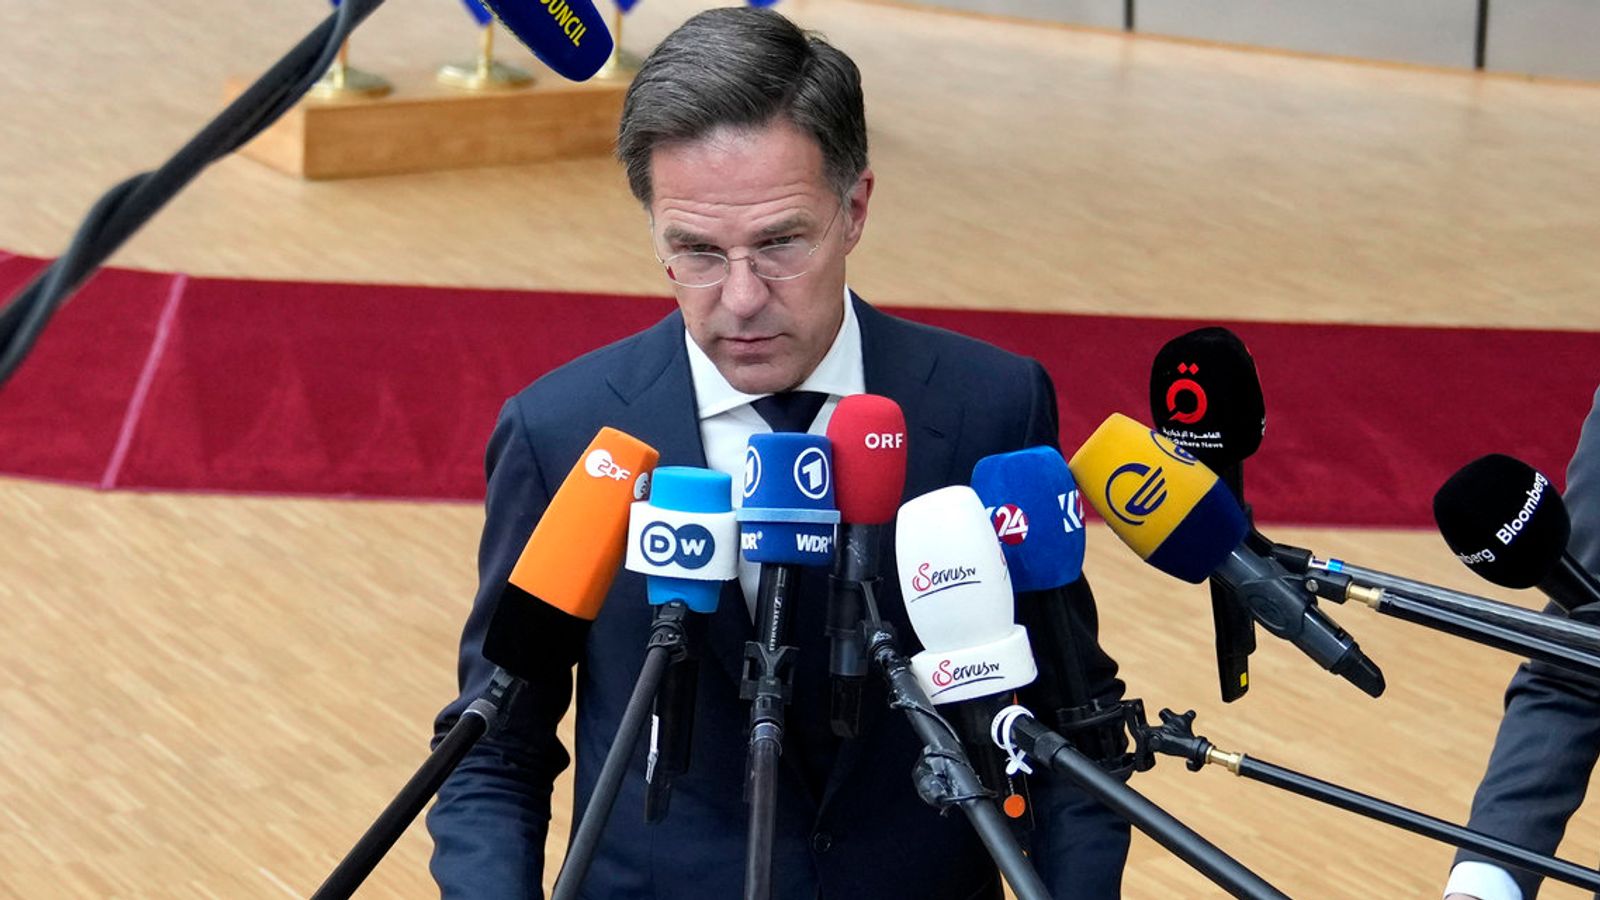 Rota announces the resignation of the Dutch government